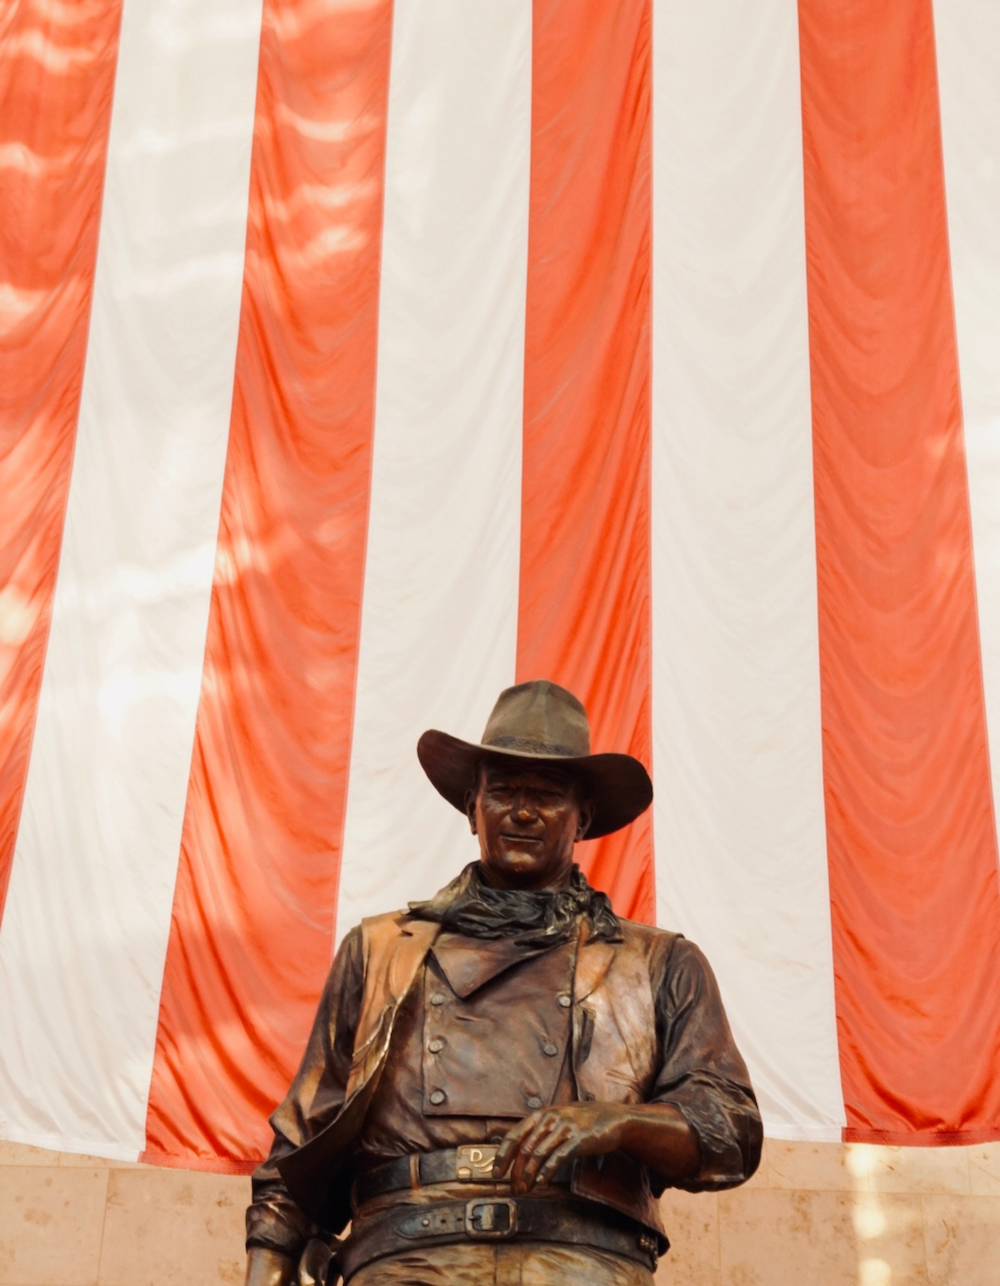 a statue of a man wearing a cowboy hat